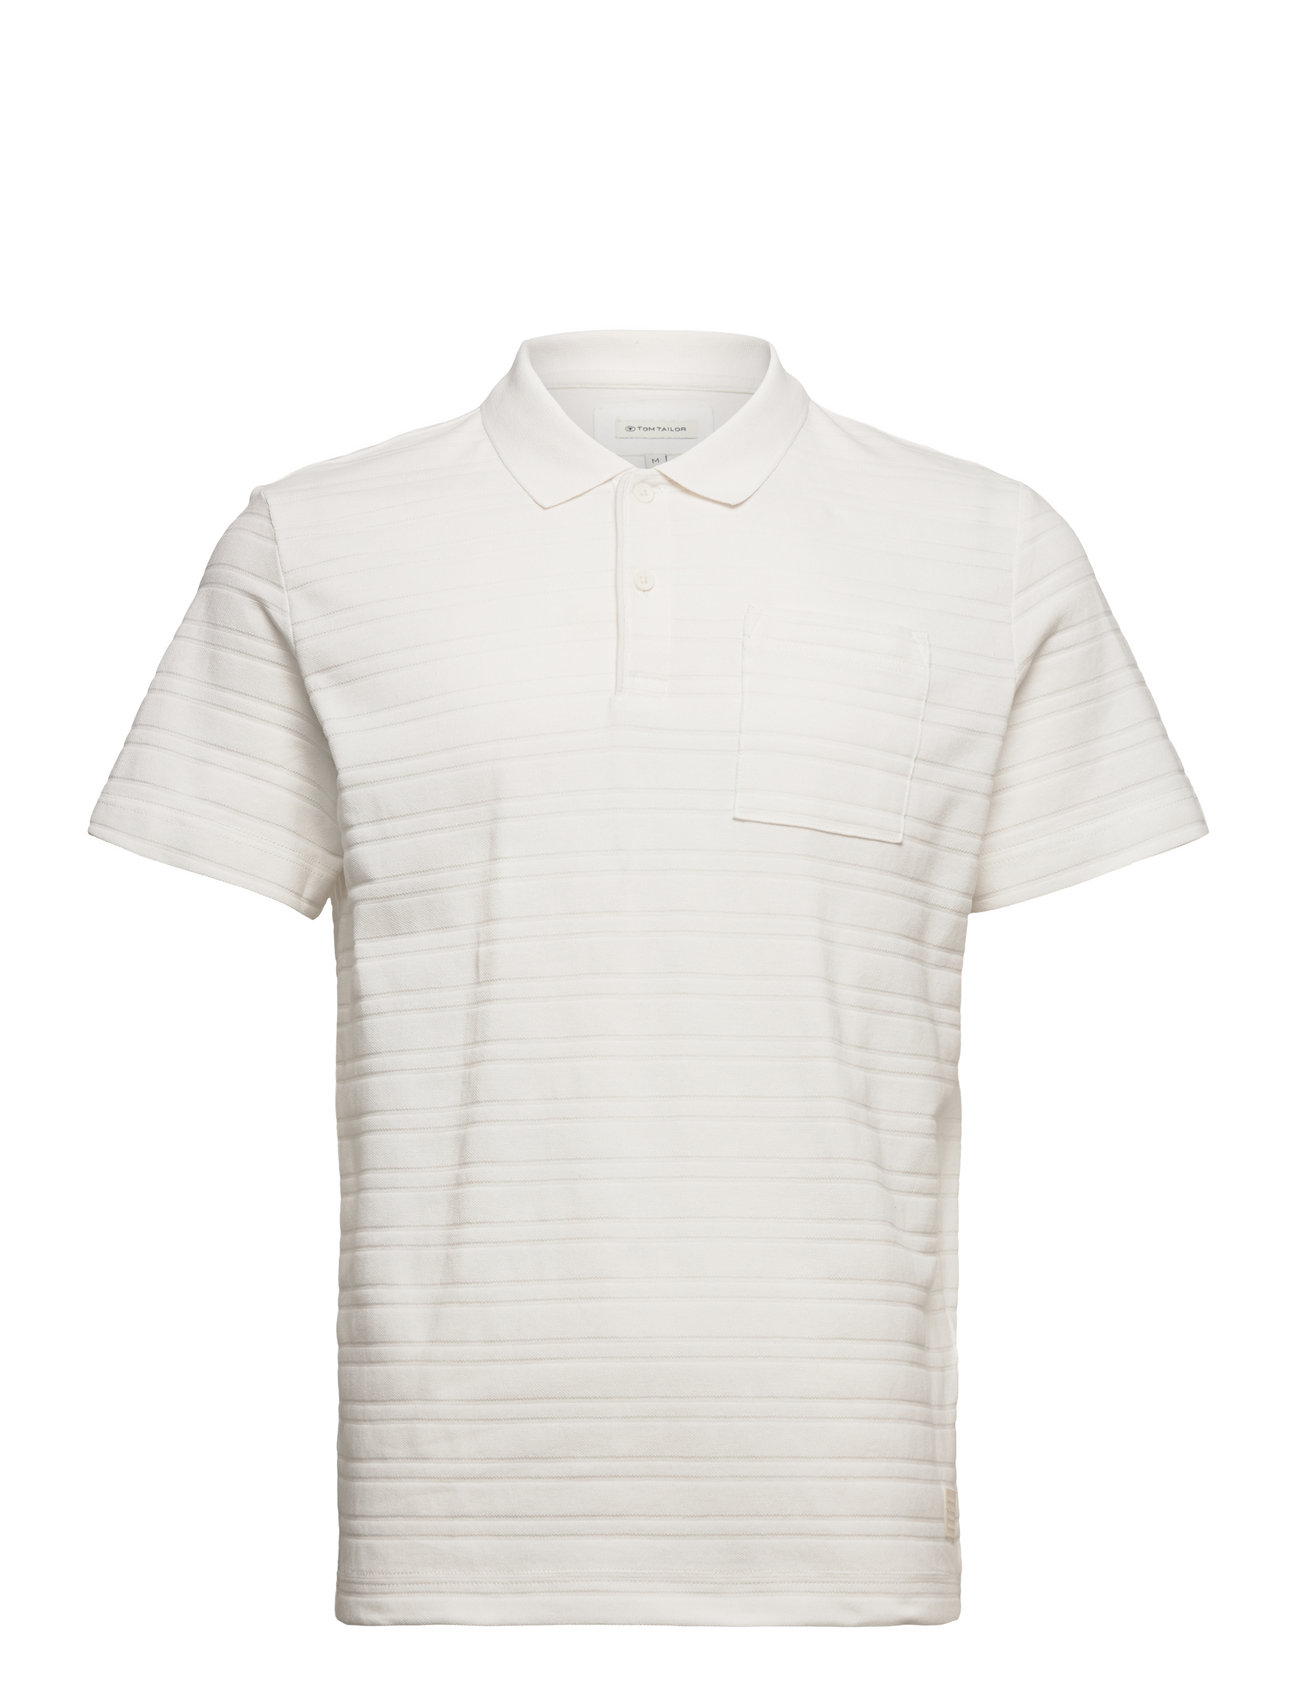 Tom Tailor Piqué Structured Polo - Polo Shirts